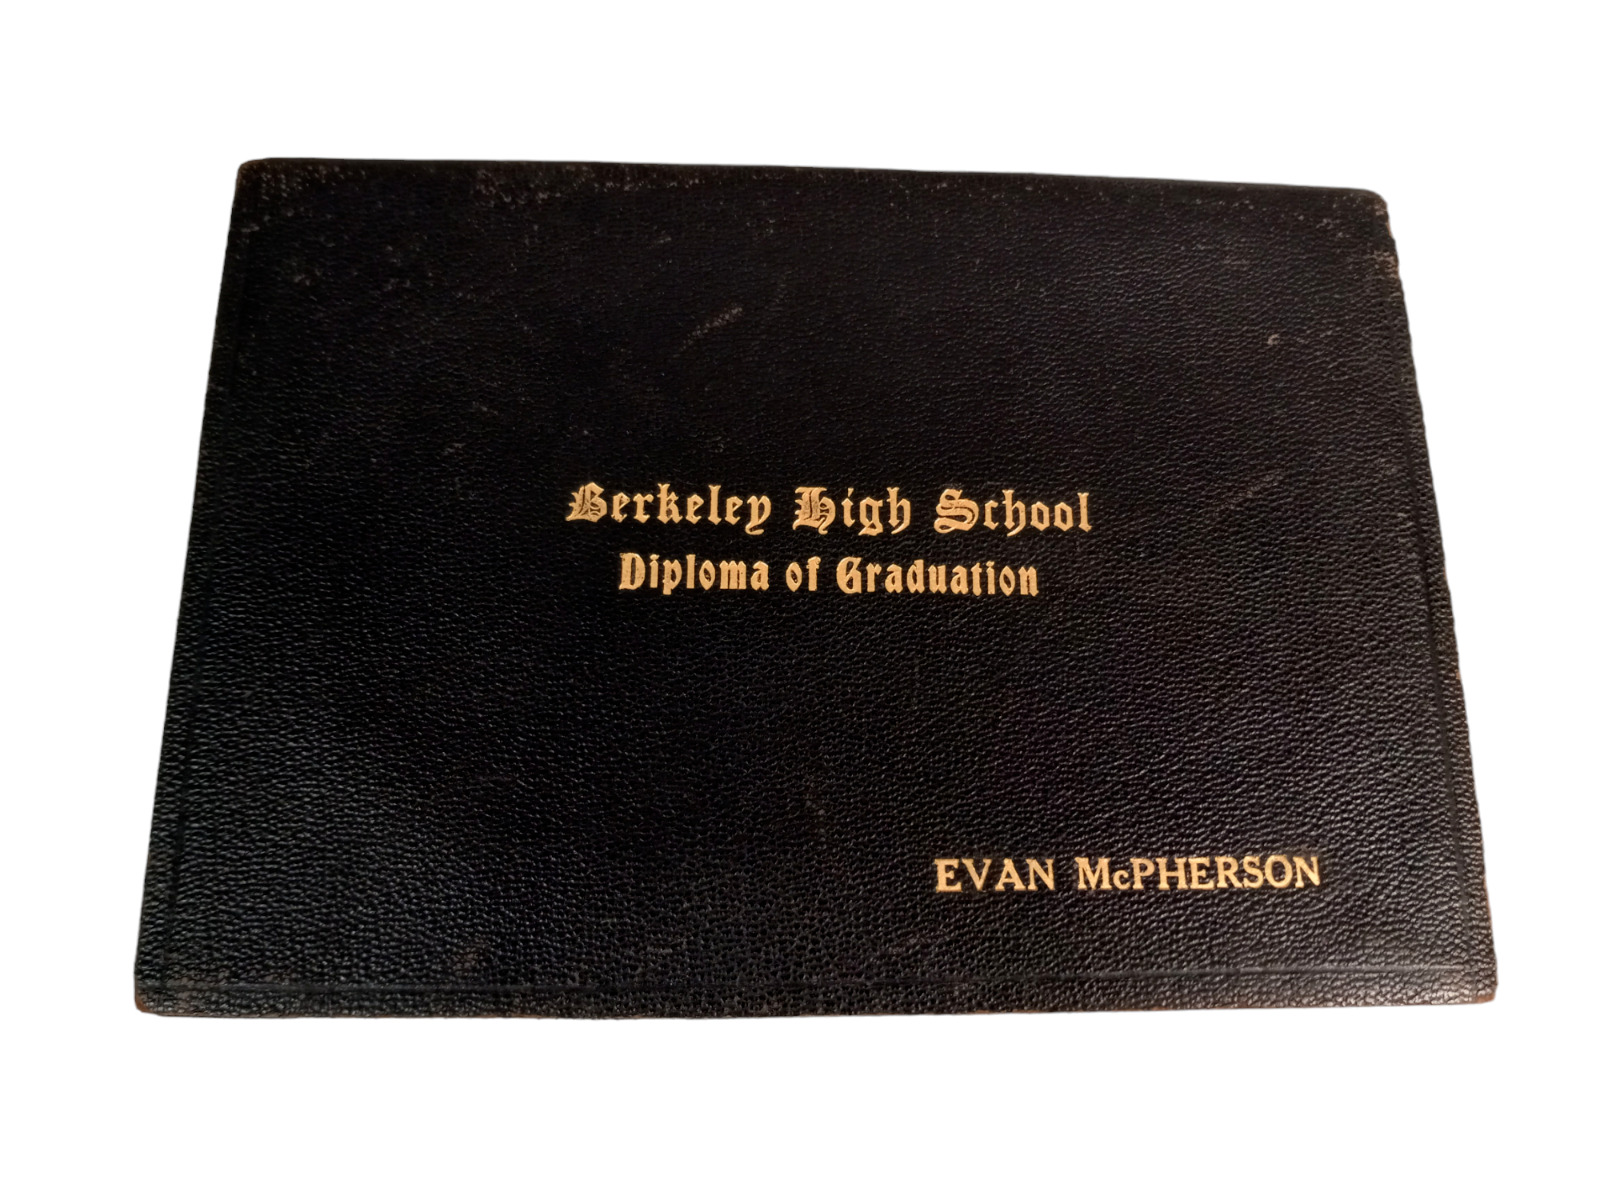 Vintage 1936 Berkeley High School Diploma of Graduation Evan McPherson